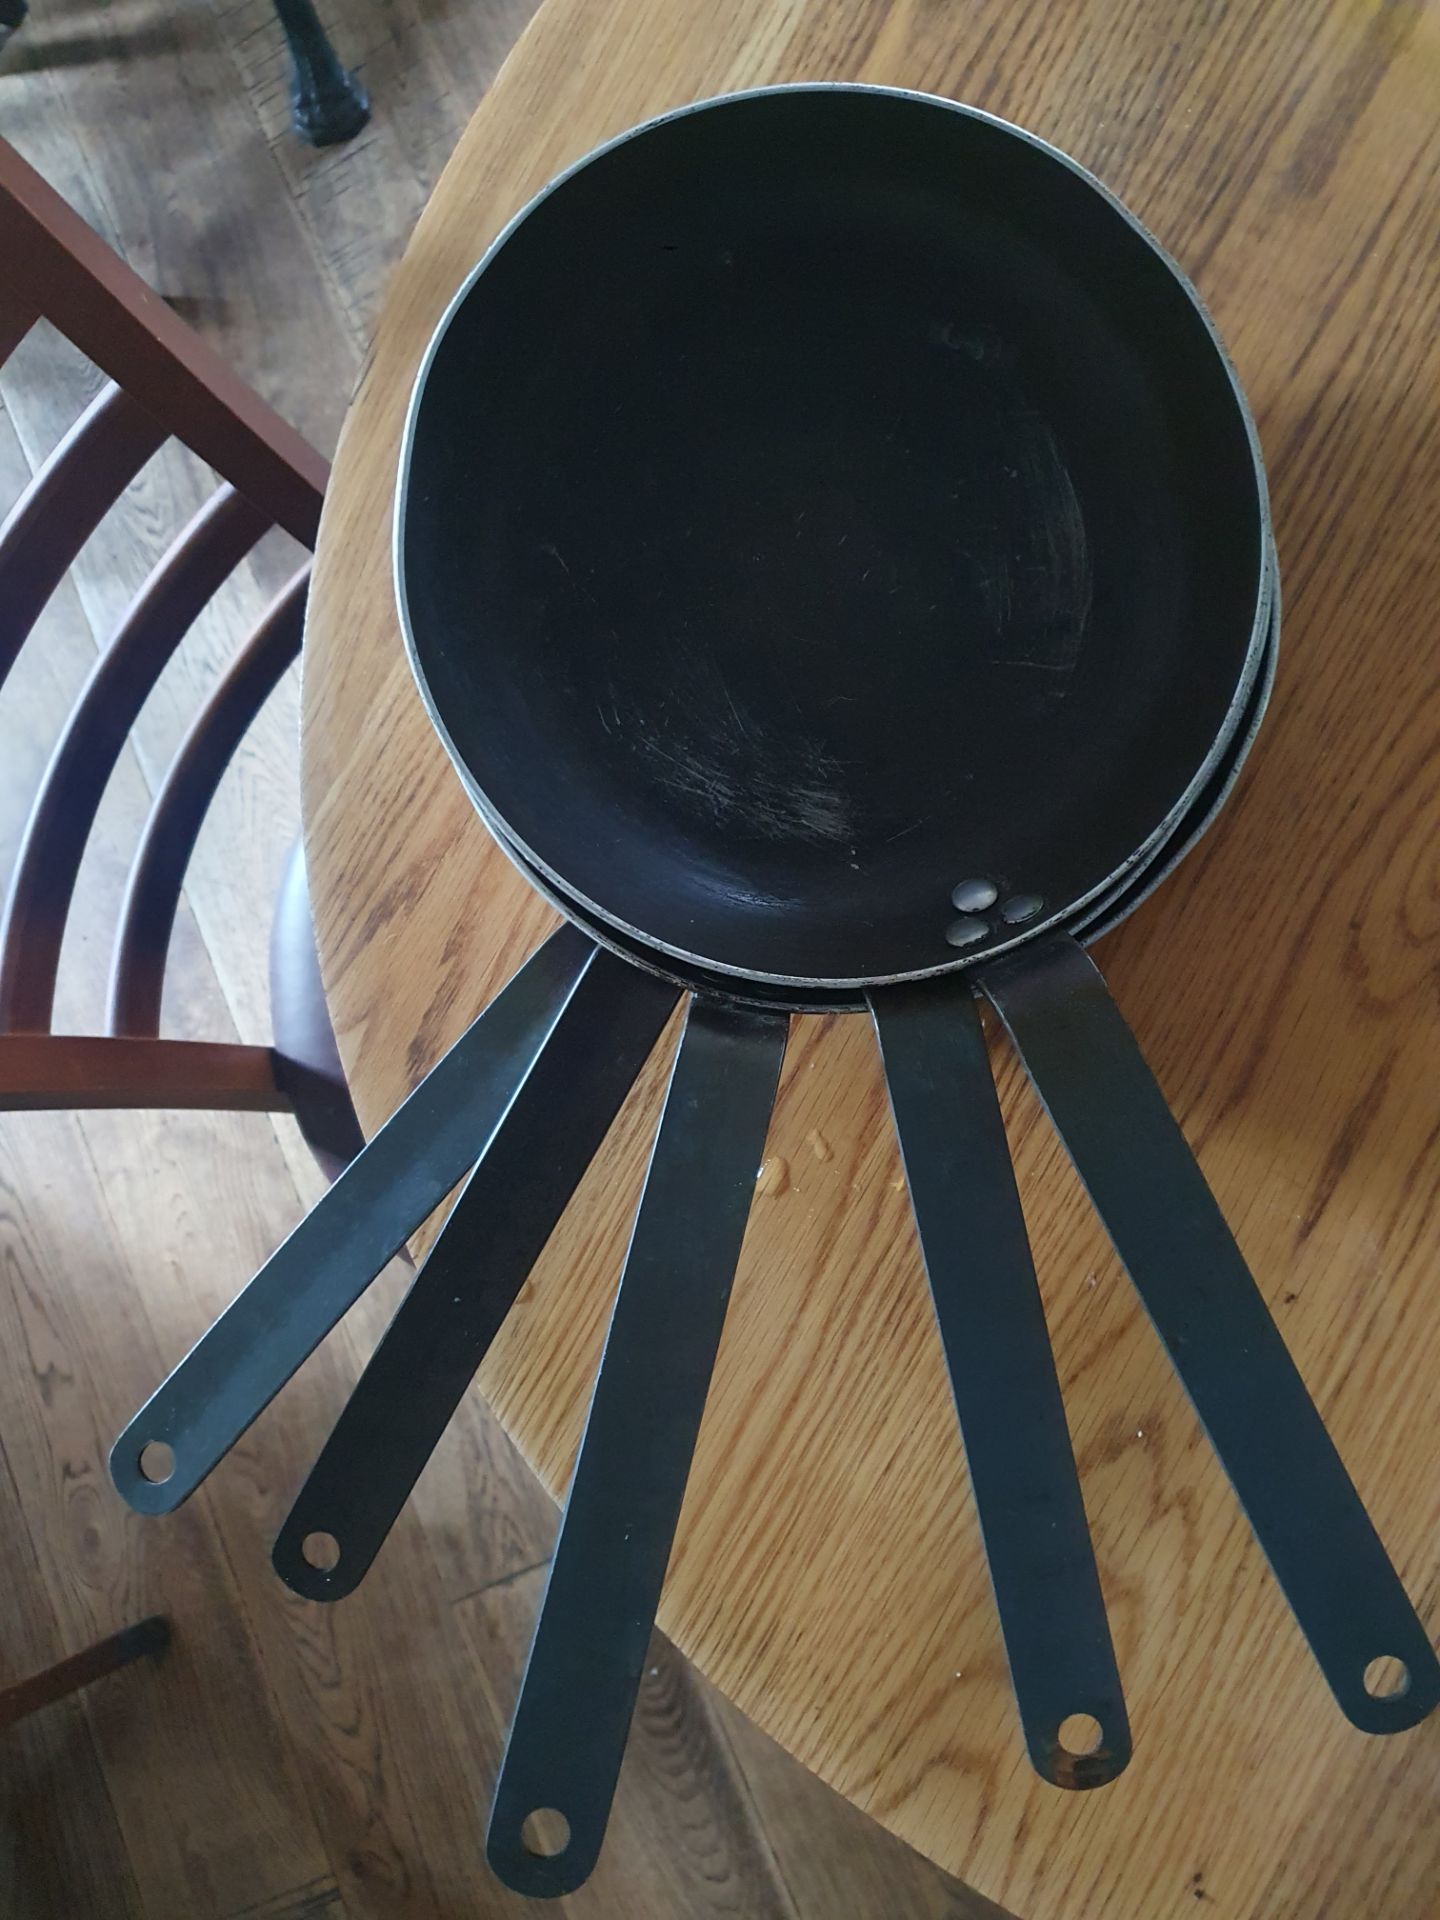 5 Medium Sized Non Stick Pans - Image 3 of 5